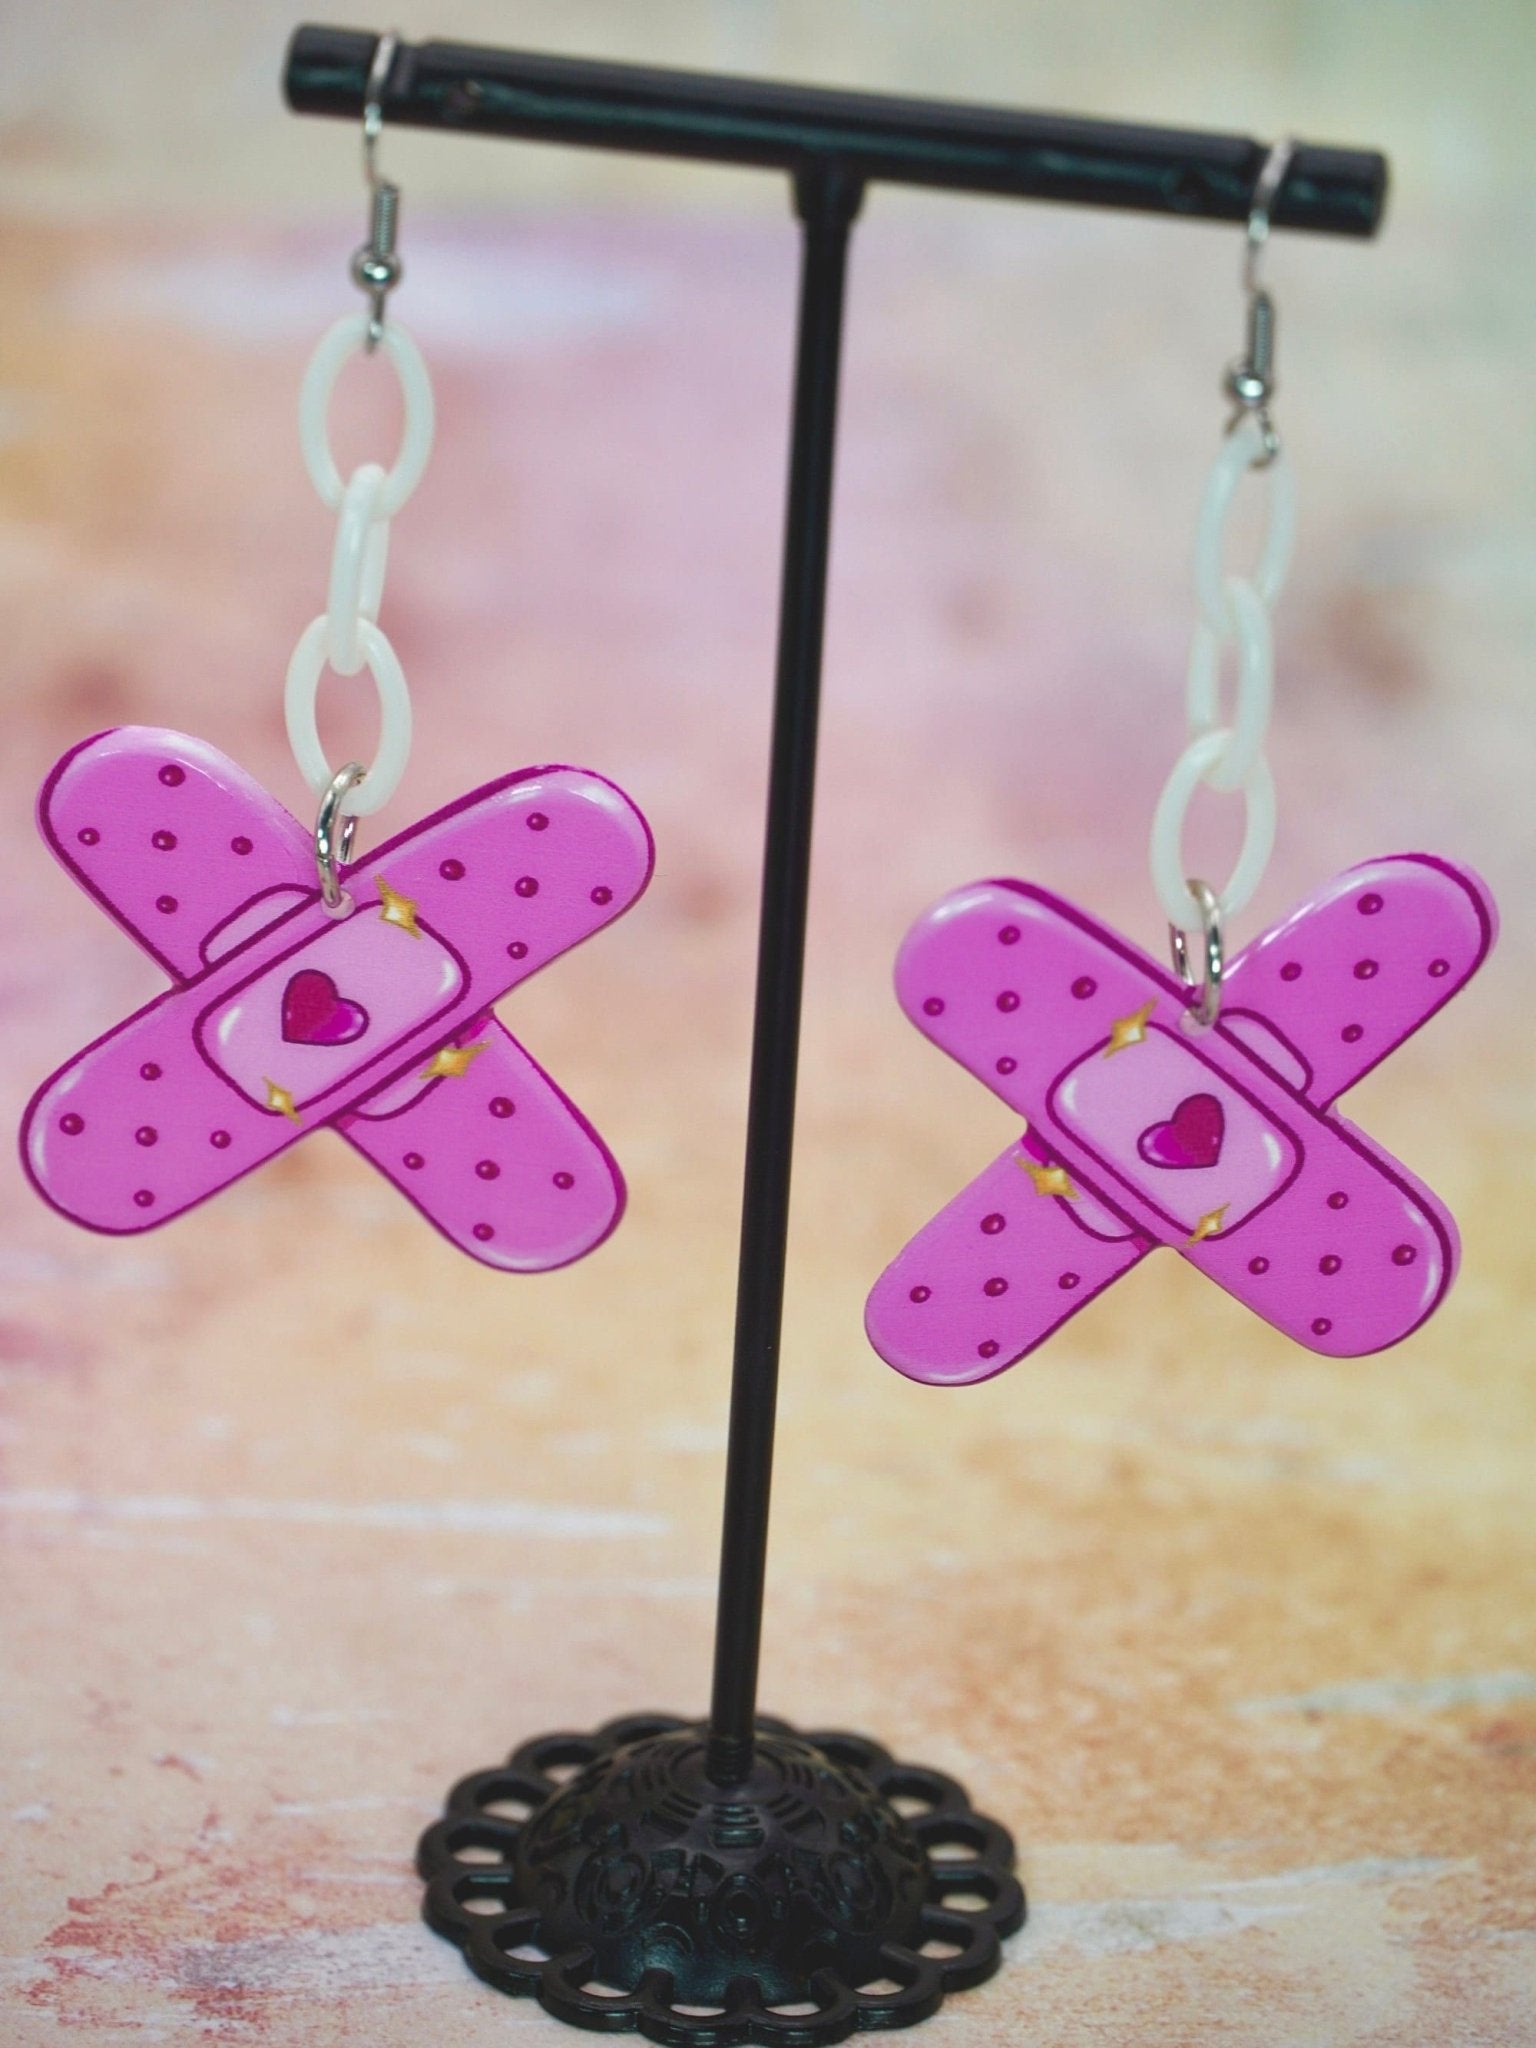 Cute Pink Bandage Dangle Earrings, Gift for Nurses, Gift for Teachers, Teacher Earrings, Nurse Earrings, Hospital Worker Gift - Dekowaii Jewelry Company